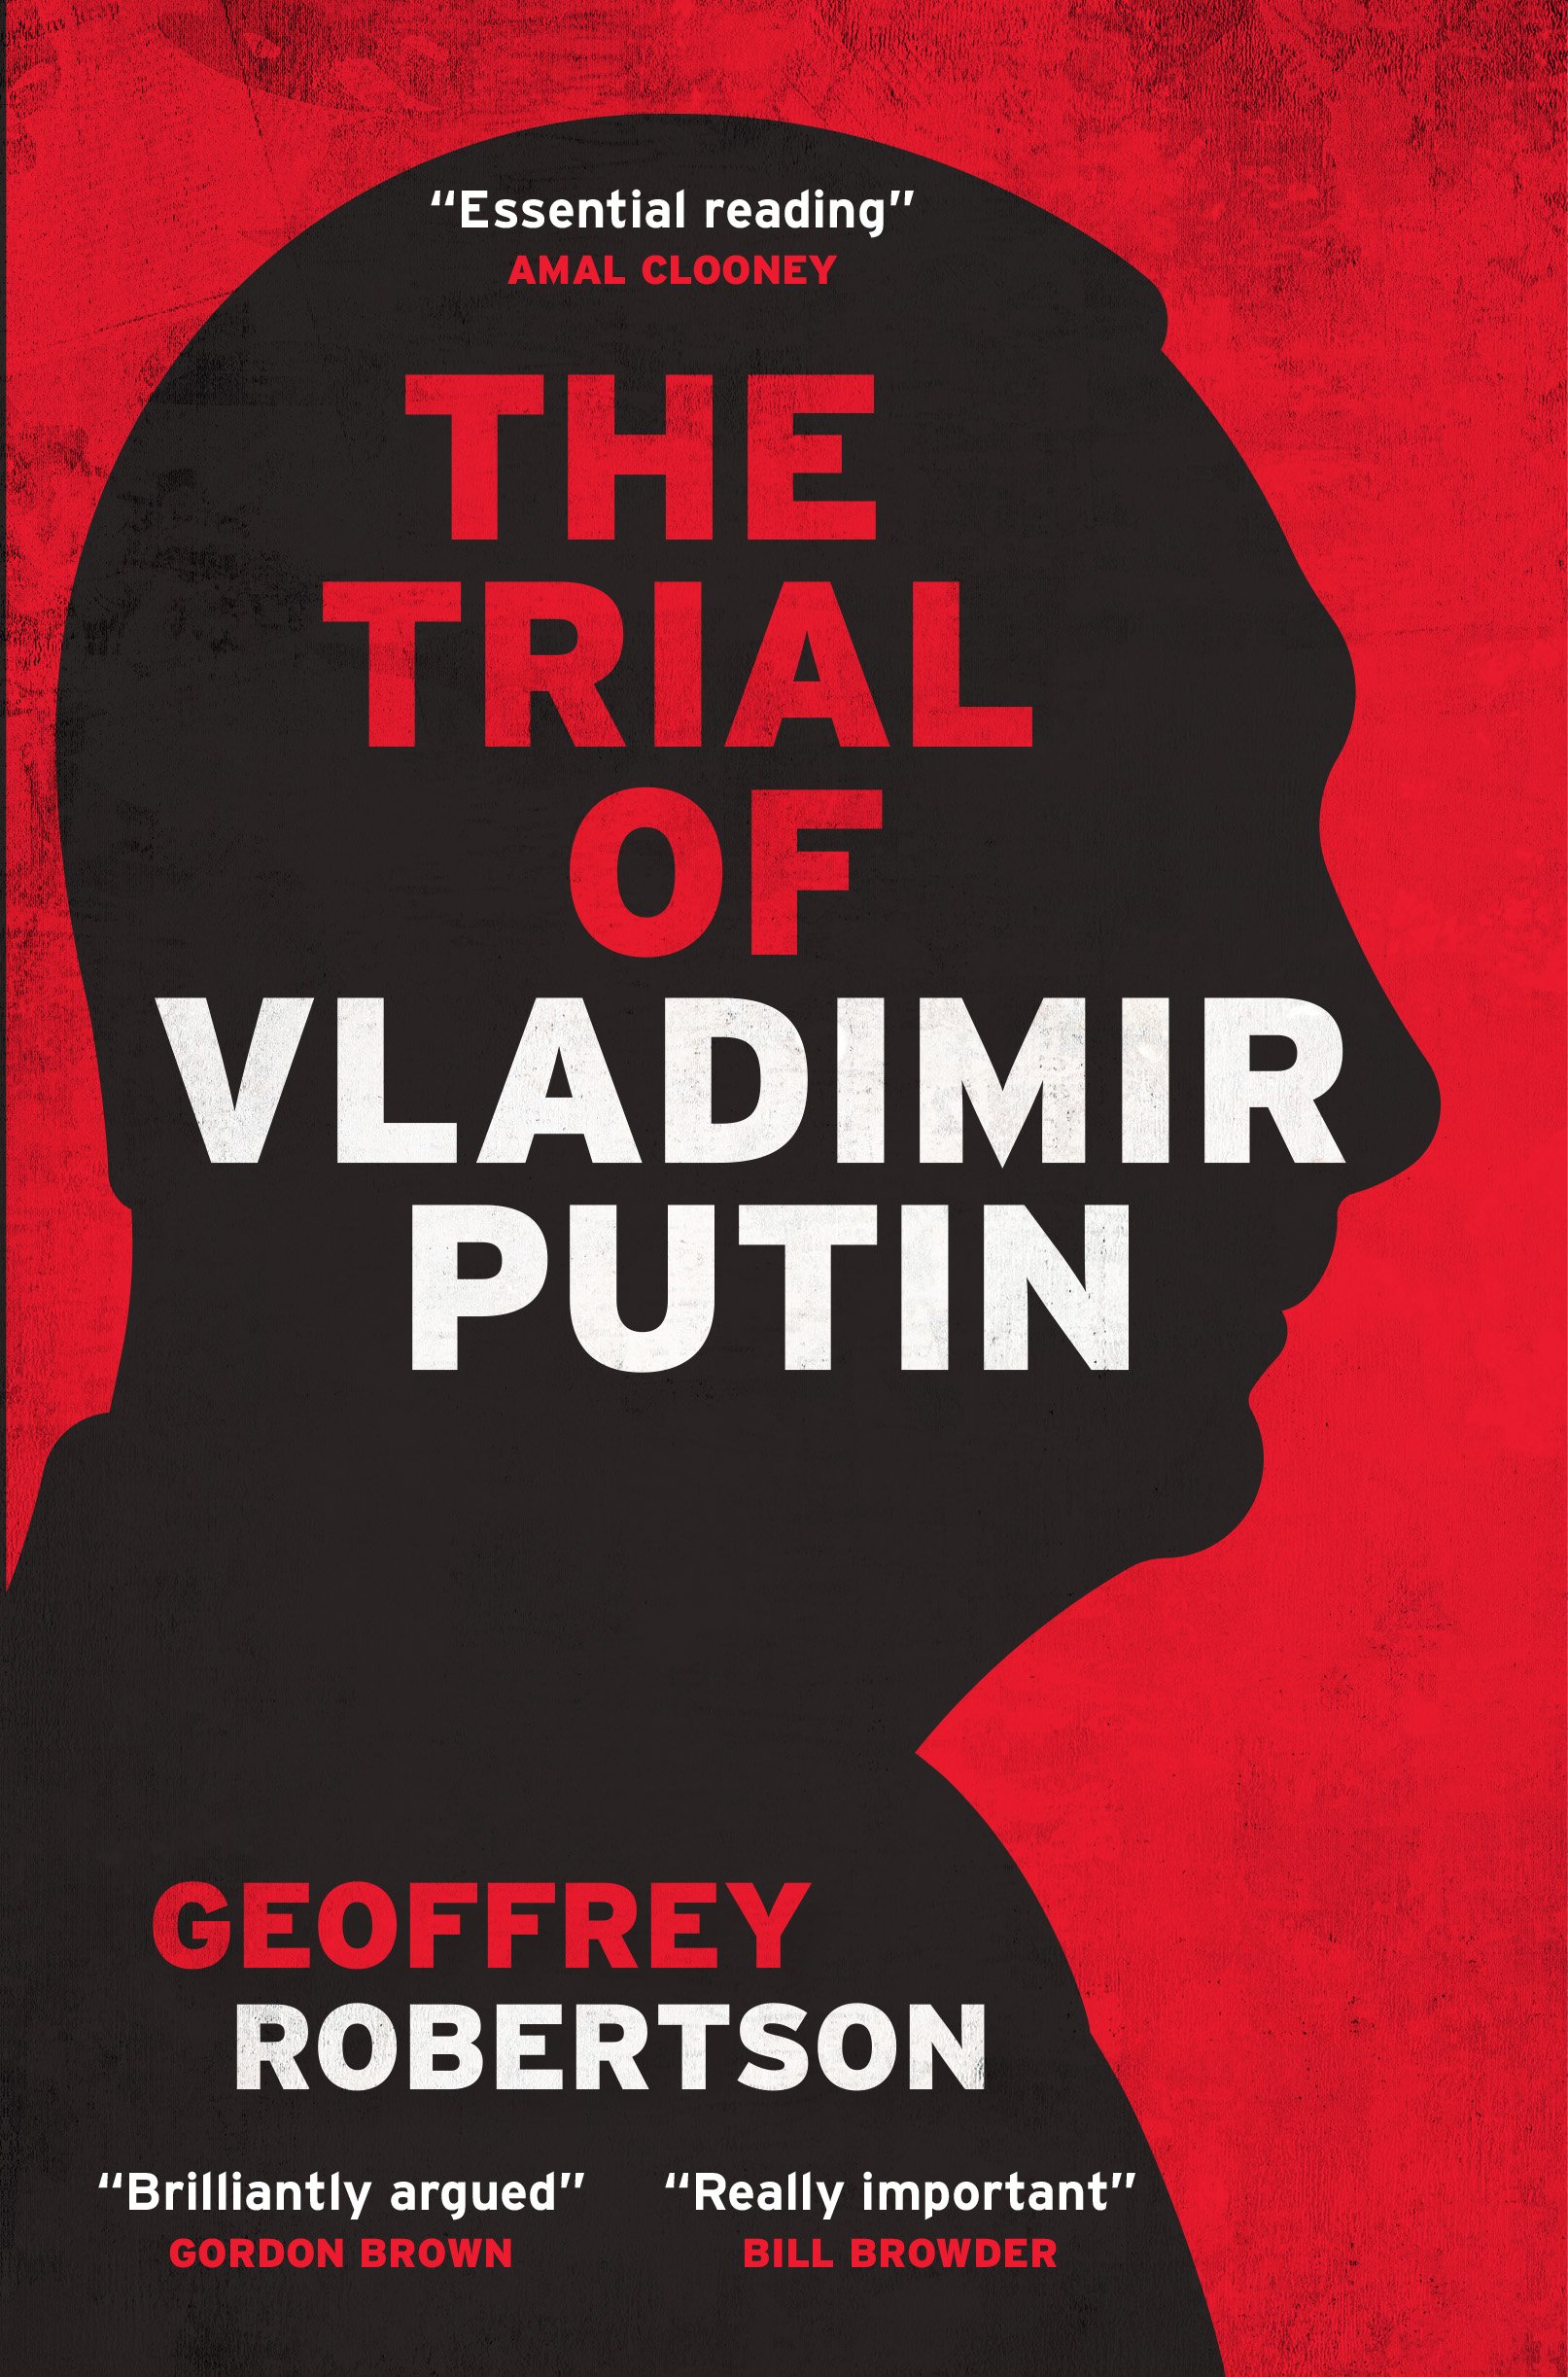 The Trial of Vladimir Putin by Geoffrey Robertson